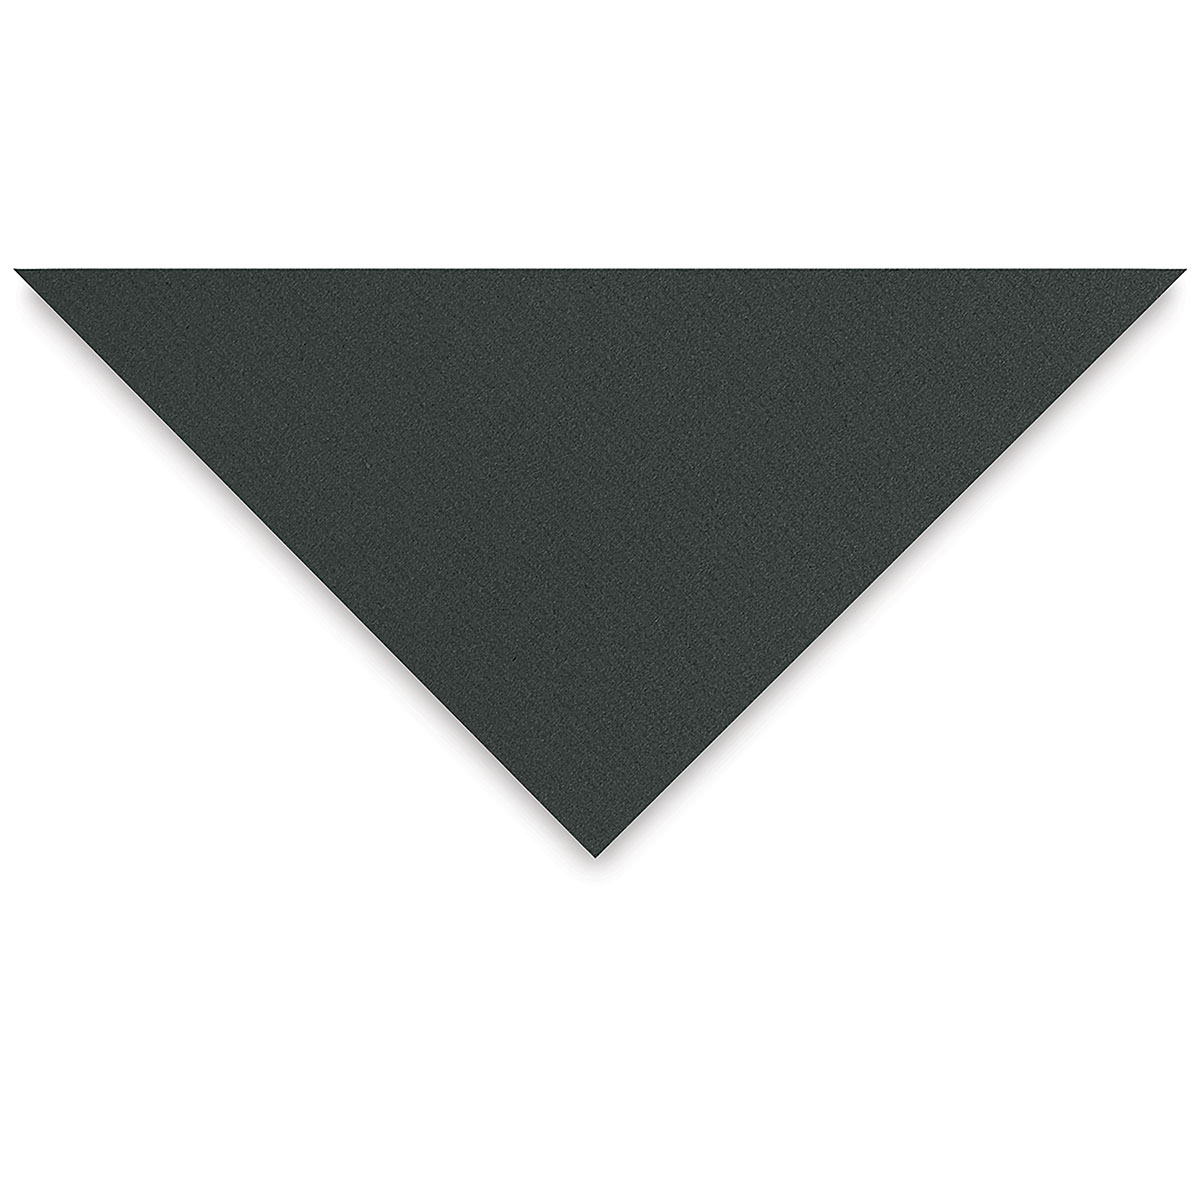 Charcoal Paper 500 Series 19 x 25 - Black